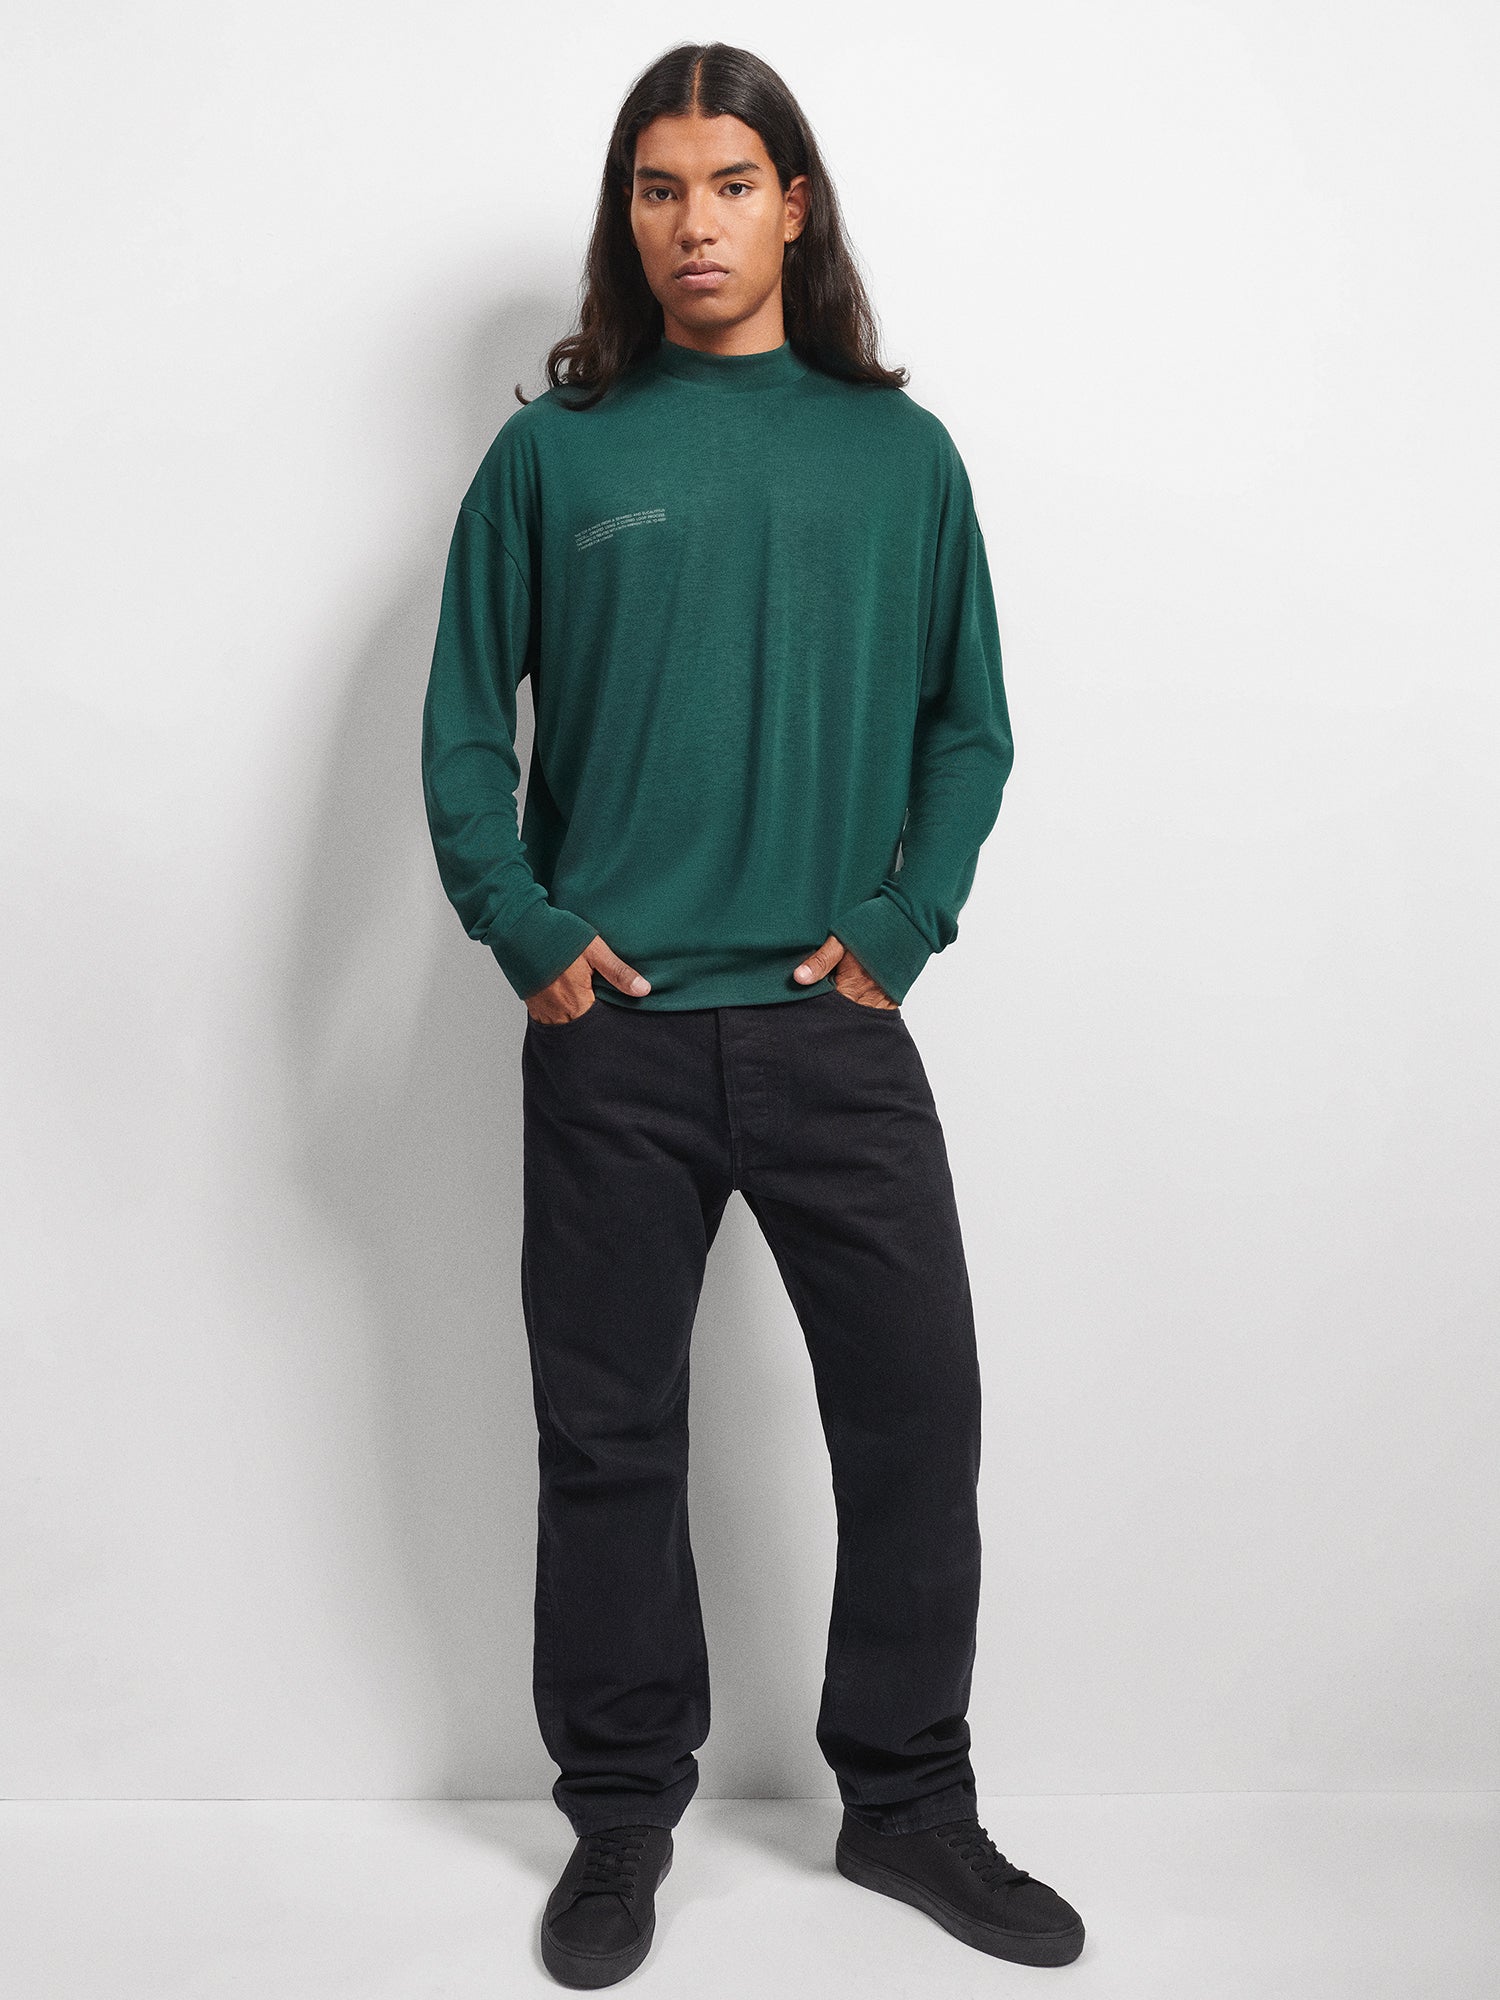 Mens_C-Fiber_Pure_High_Neck_T-Shirt_Foliage_Green-4